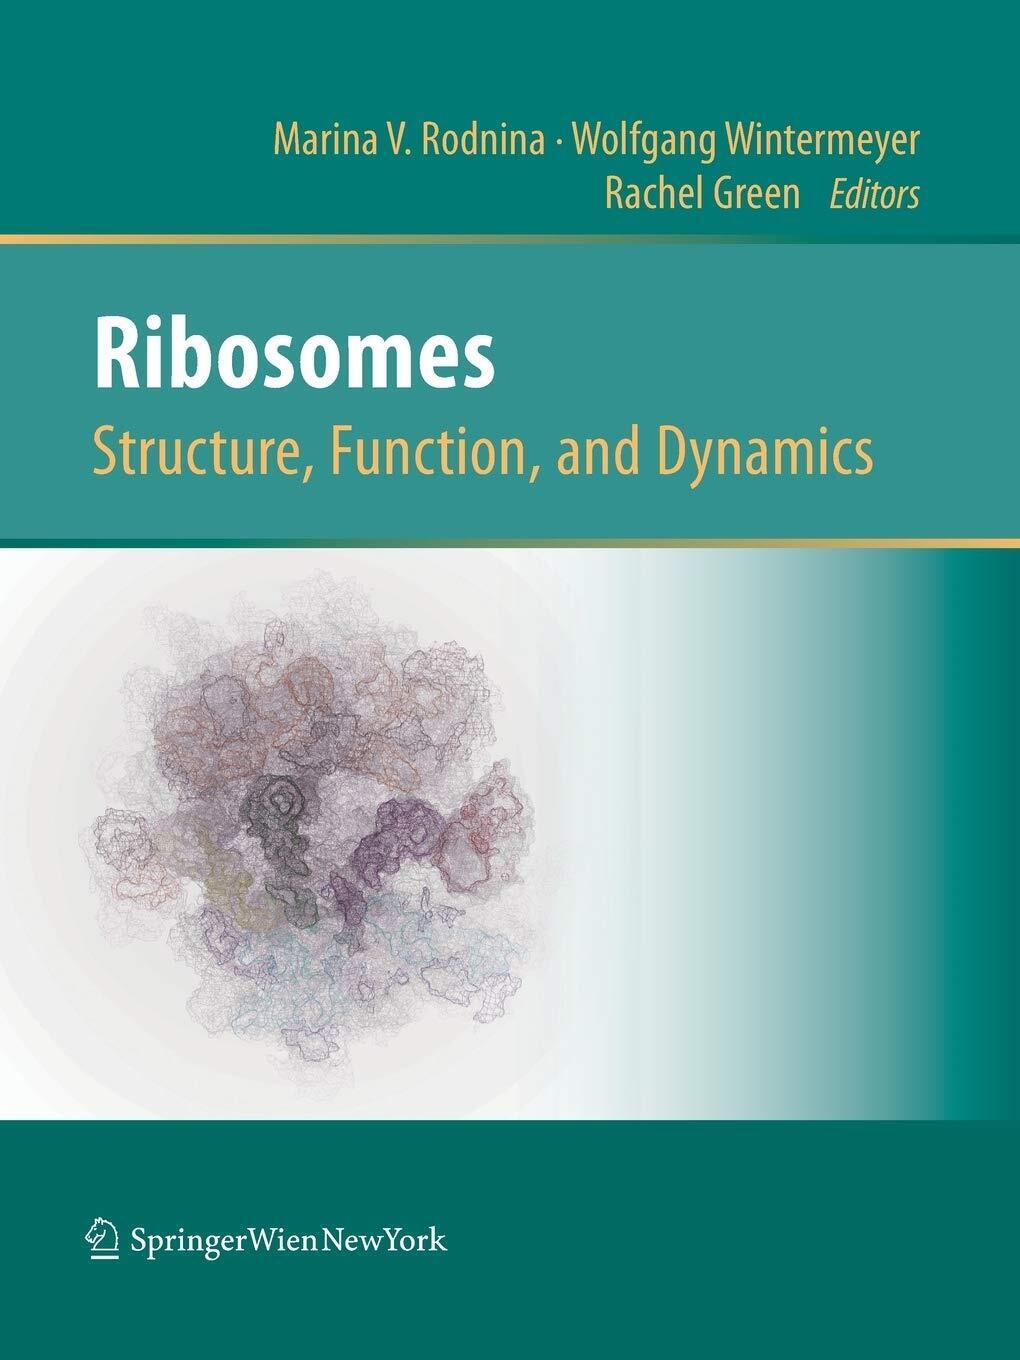 Ribosomes Structure, Function, and Dynamics - Marina V. Rodnina - Springer, 2016